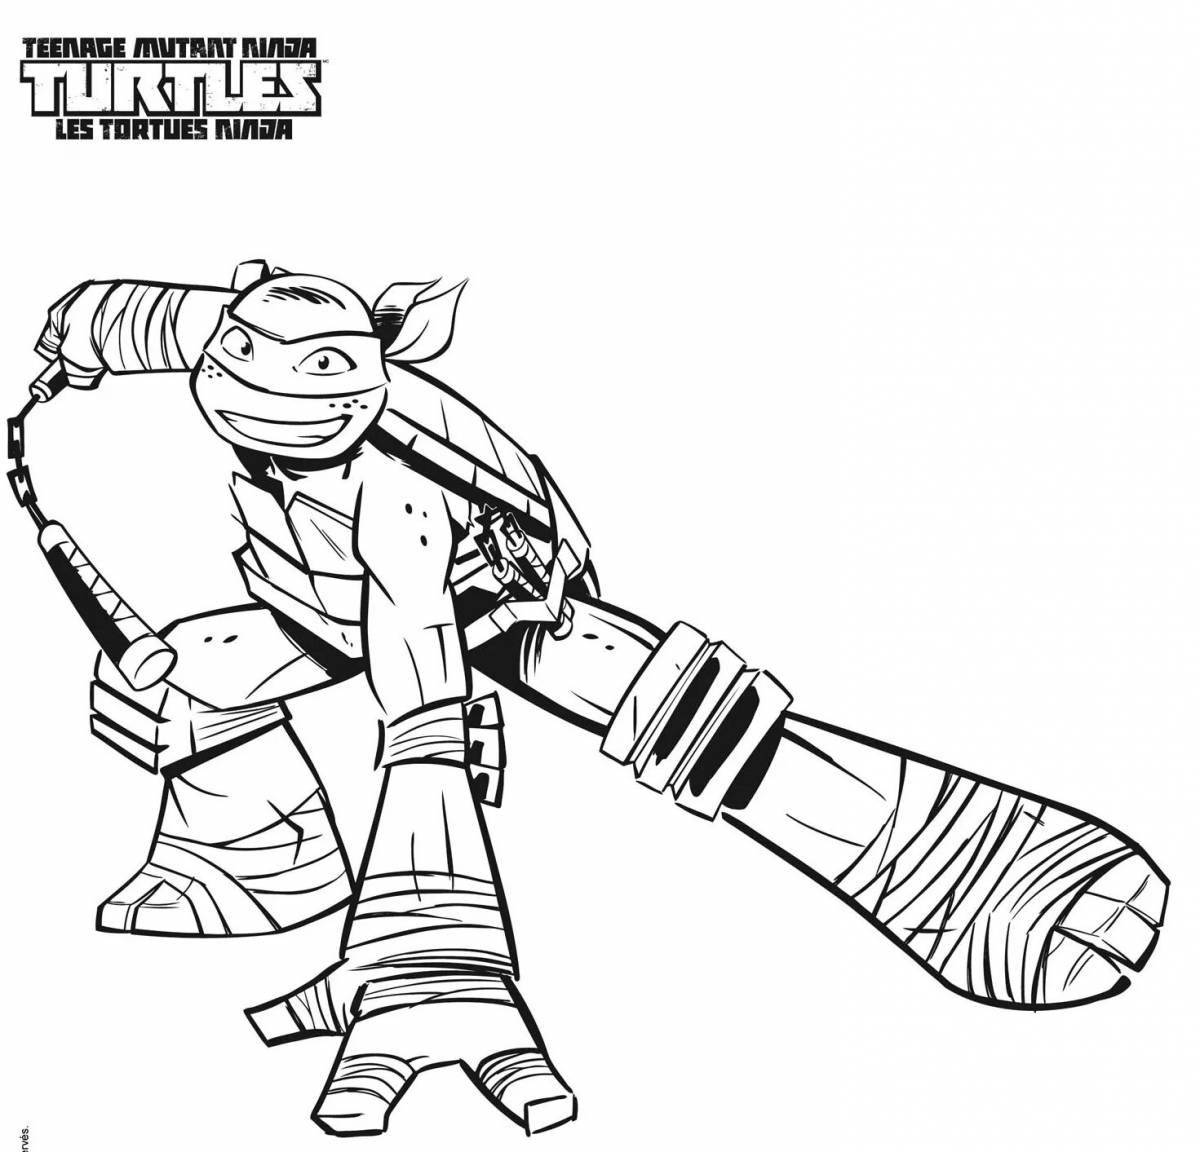 Teenage Mutant Ninja Turtles glamor coloring book